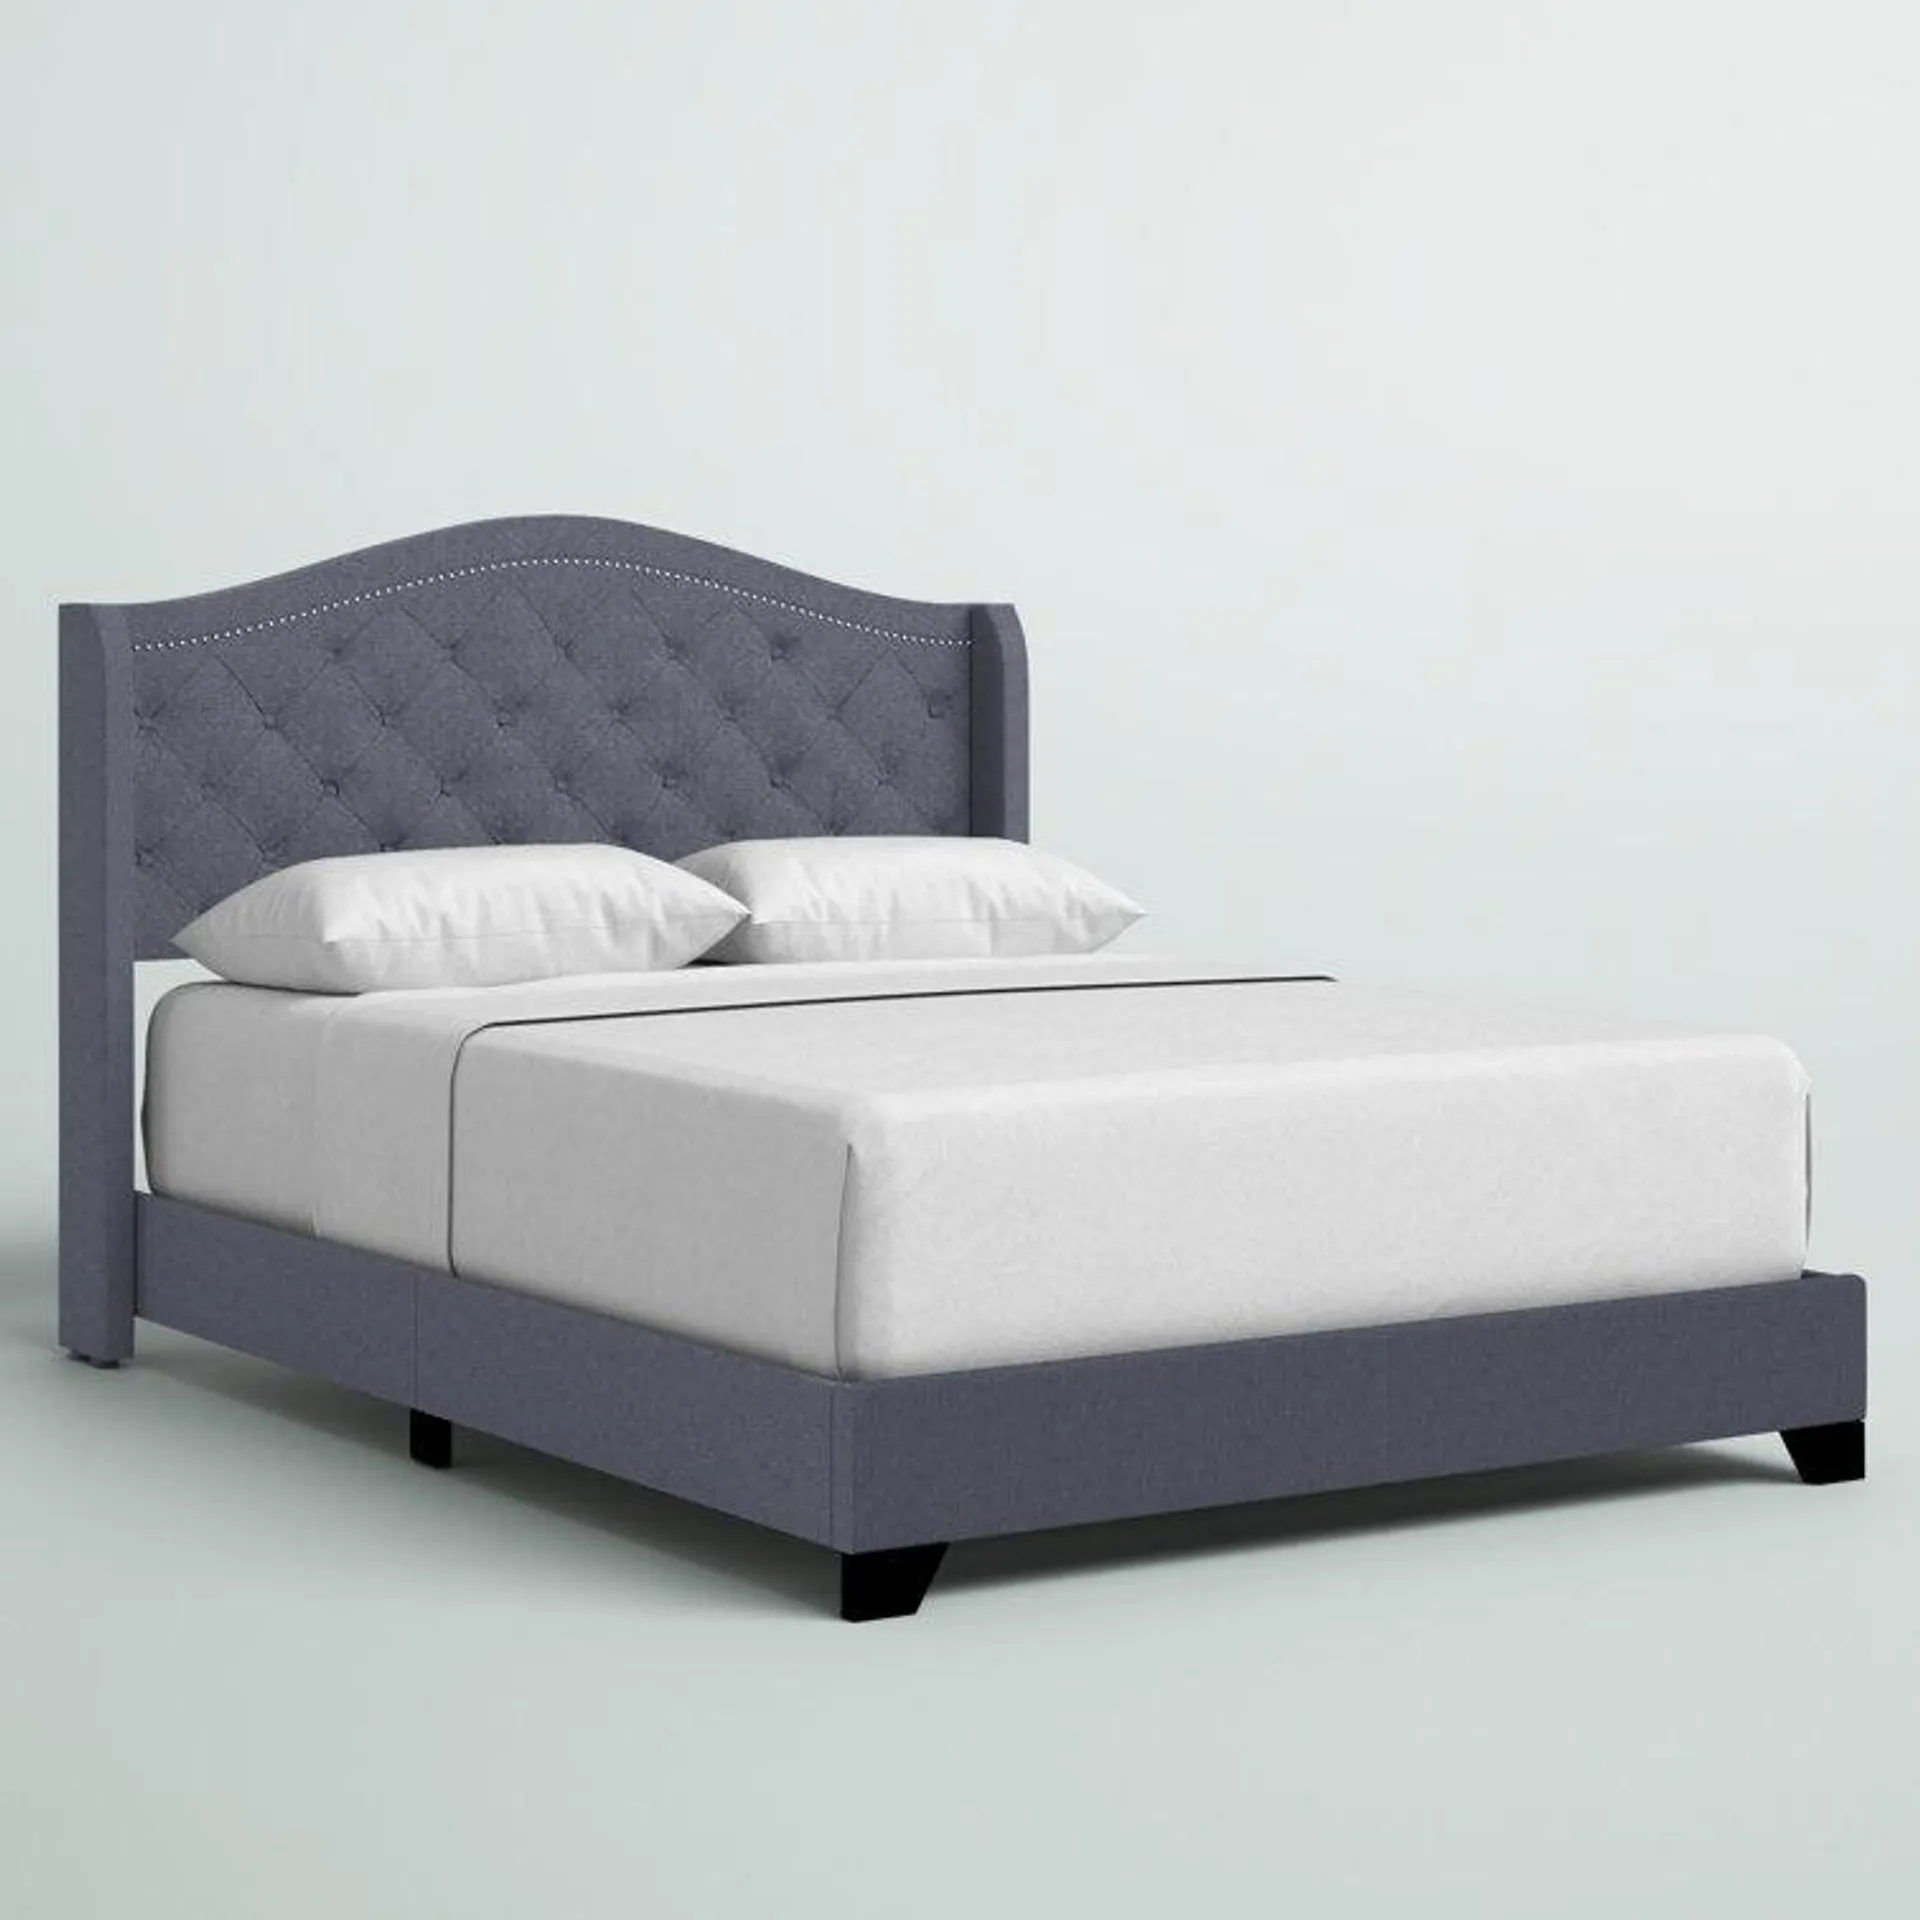 Abrams Upholstered Standard Bed